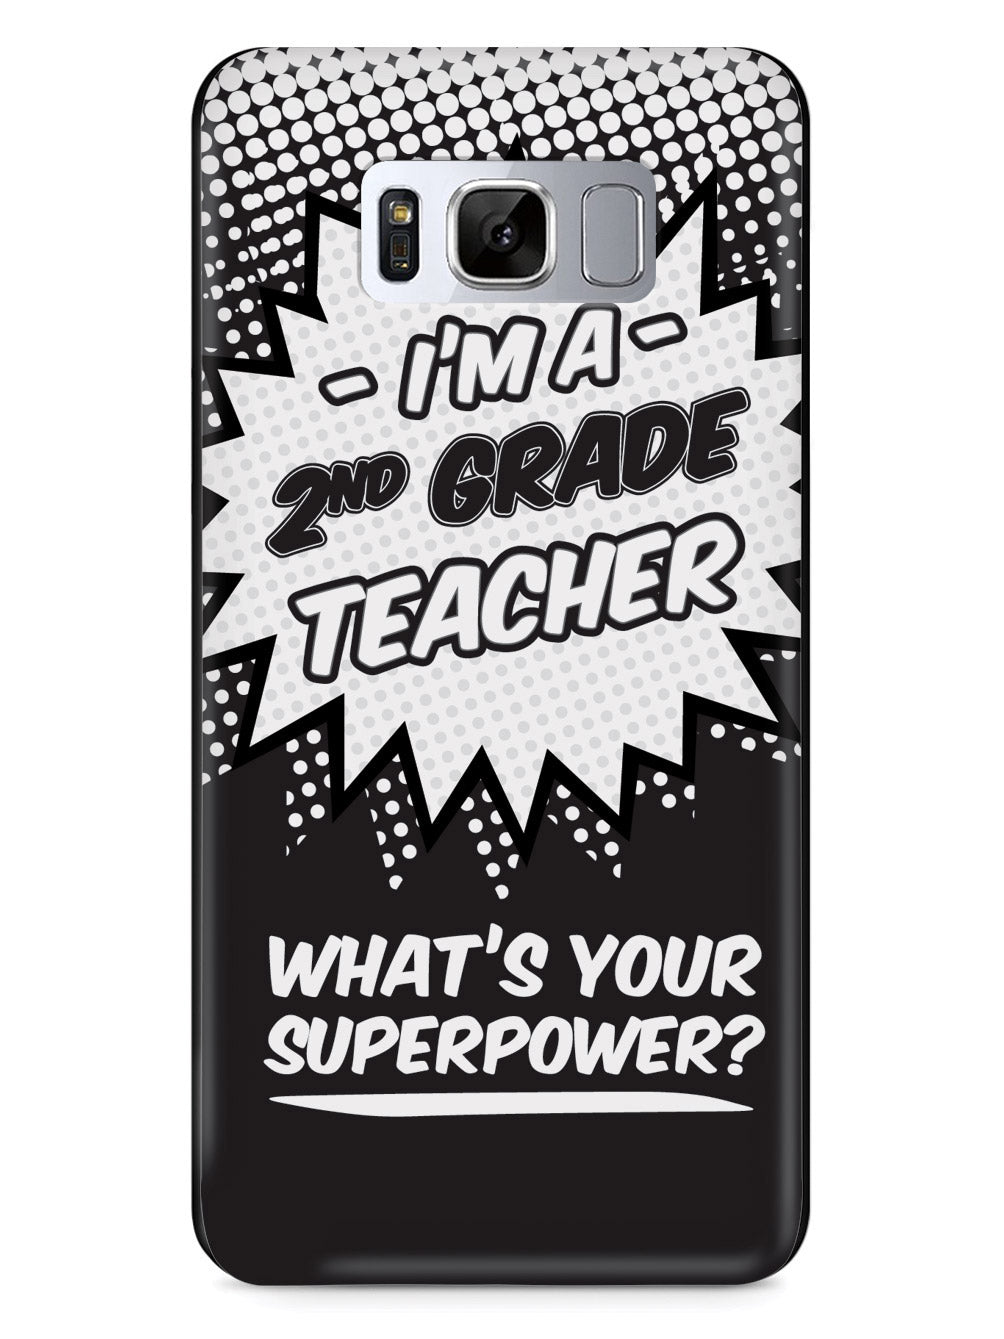 2nd Grade Teacher - What's Your Superpower? Case